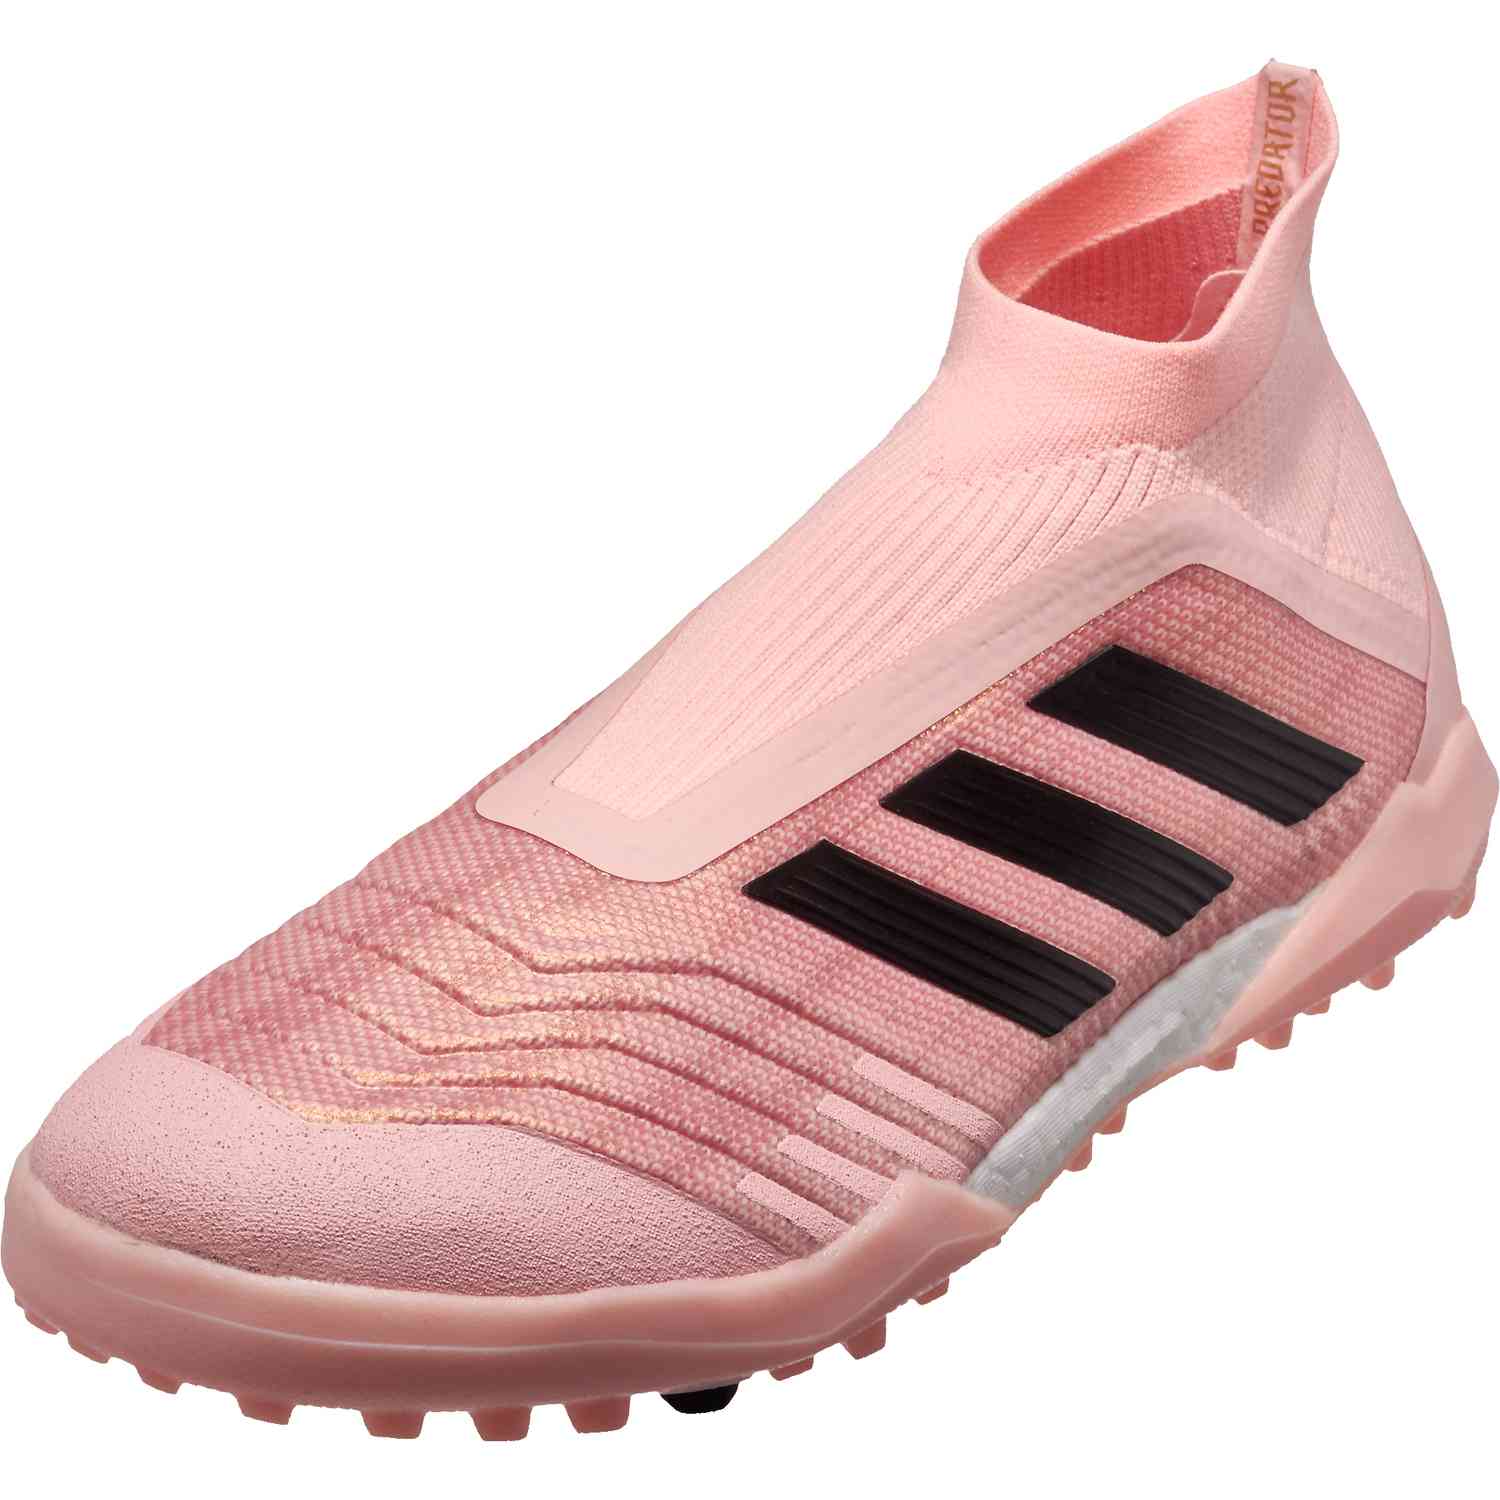 adidas predator indoor pink